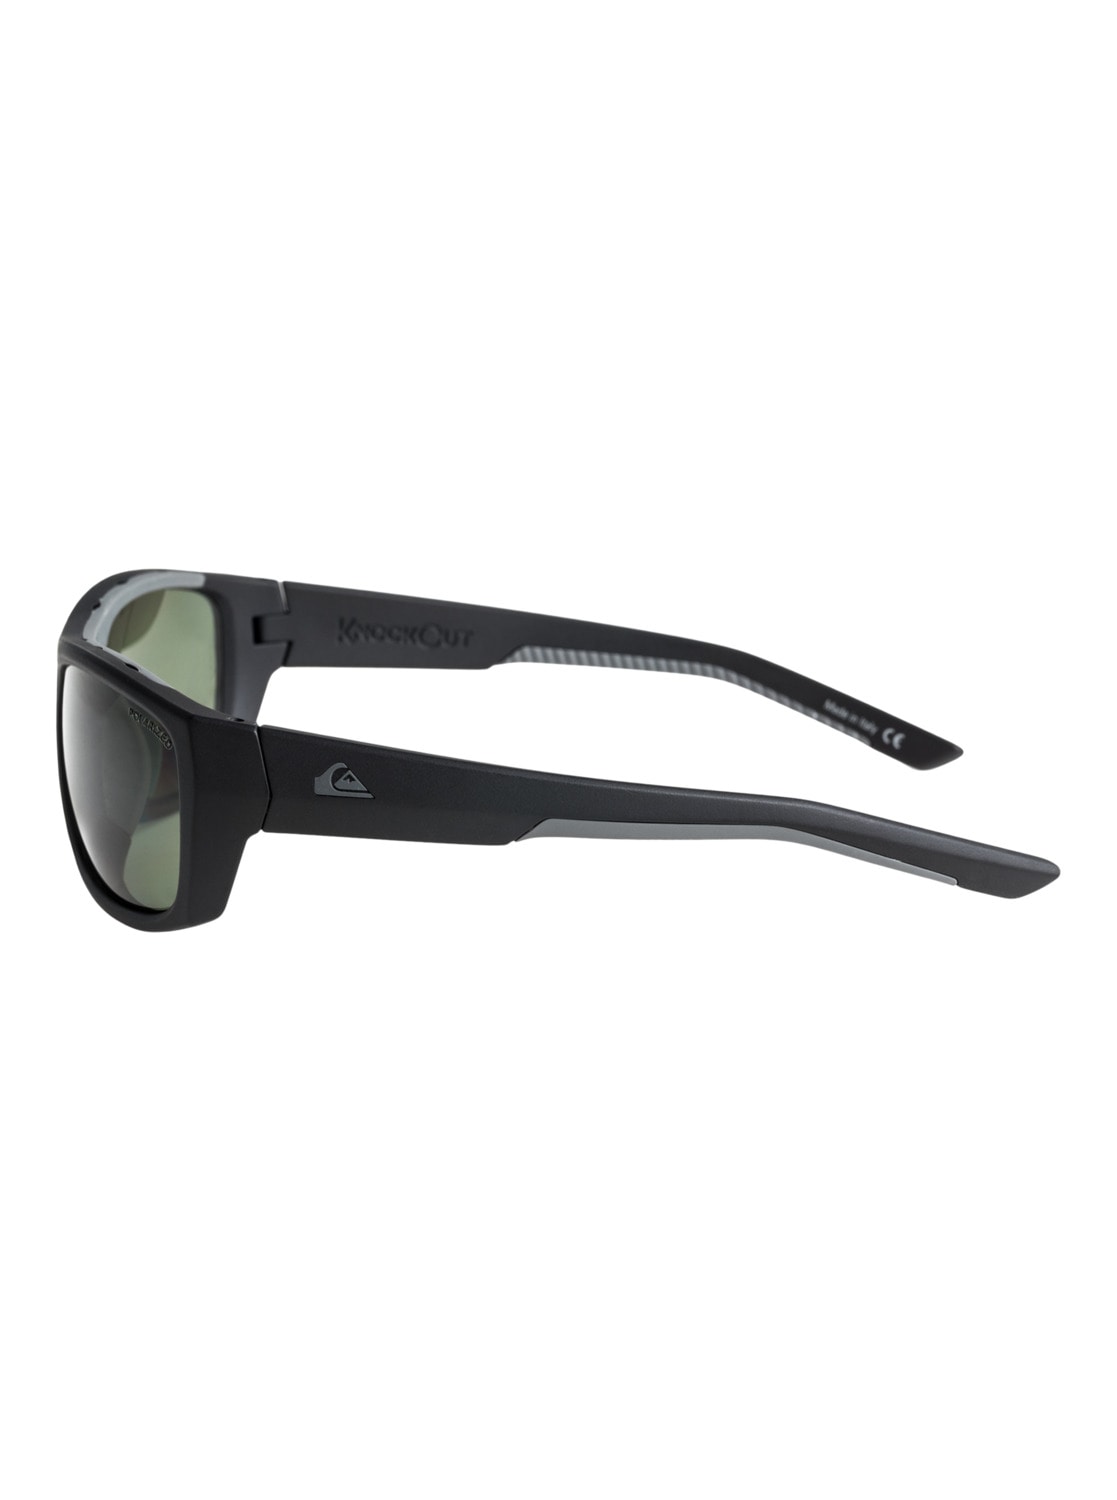 Quiksilver Sonnenbrille »Knockout Polarized« kaufen bei OTTO